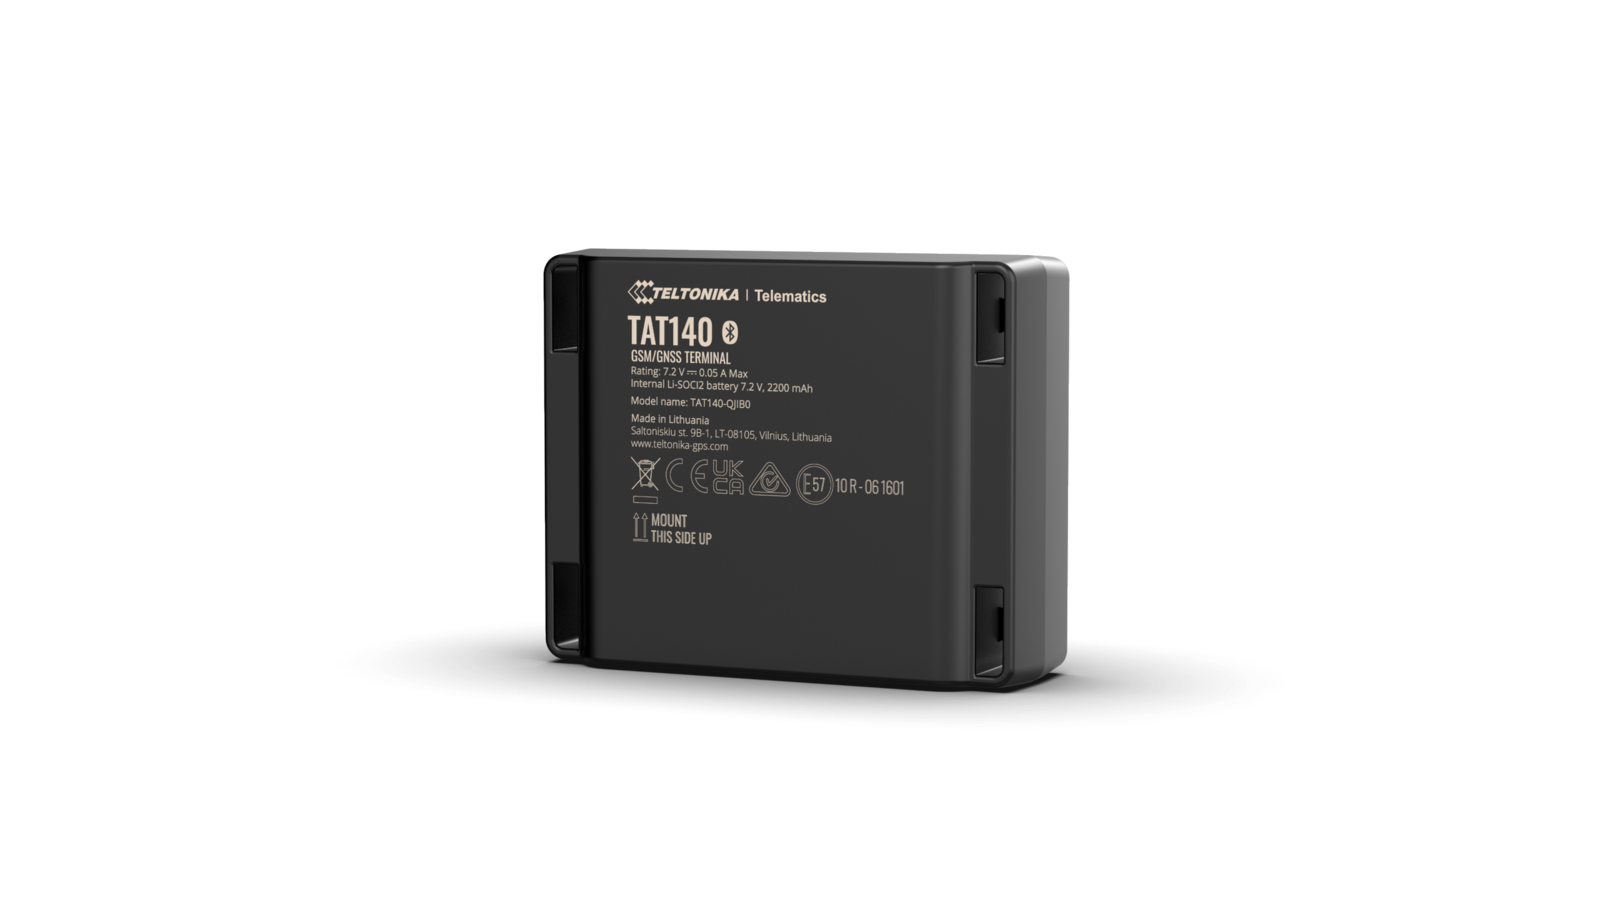 GpsGate supports Teltonika's TAT140 device